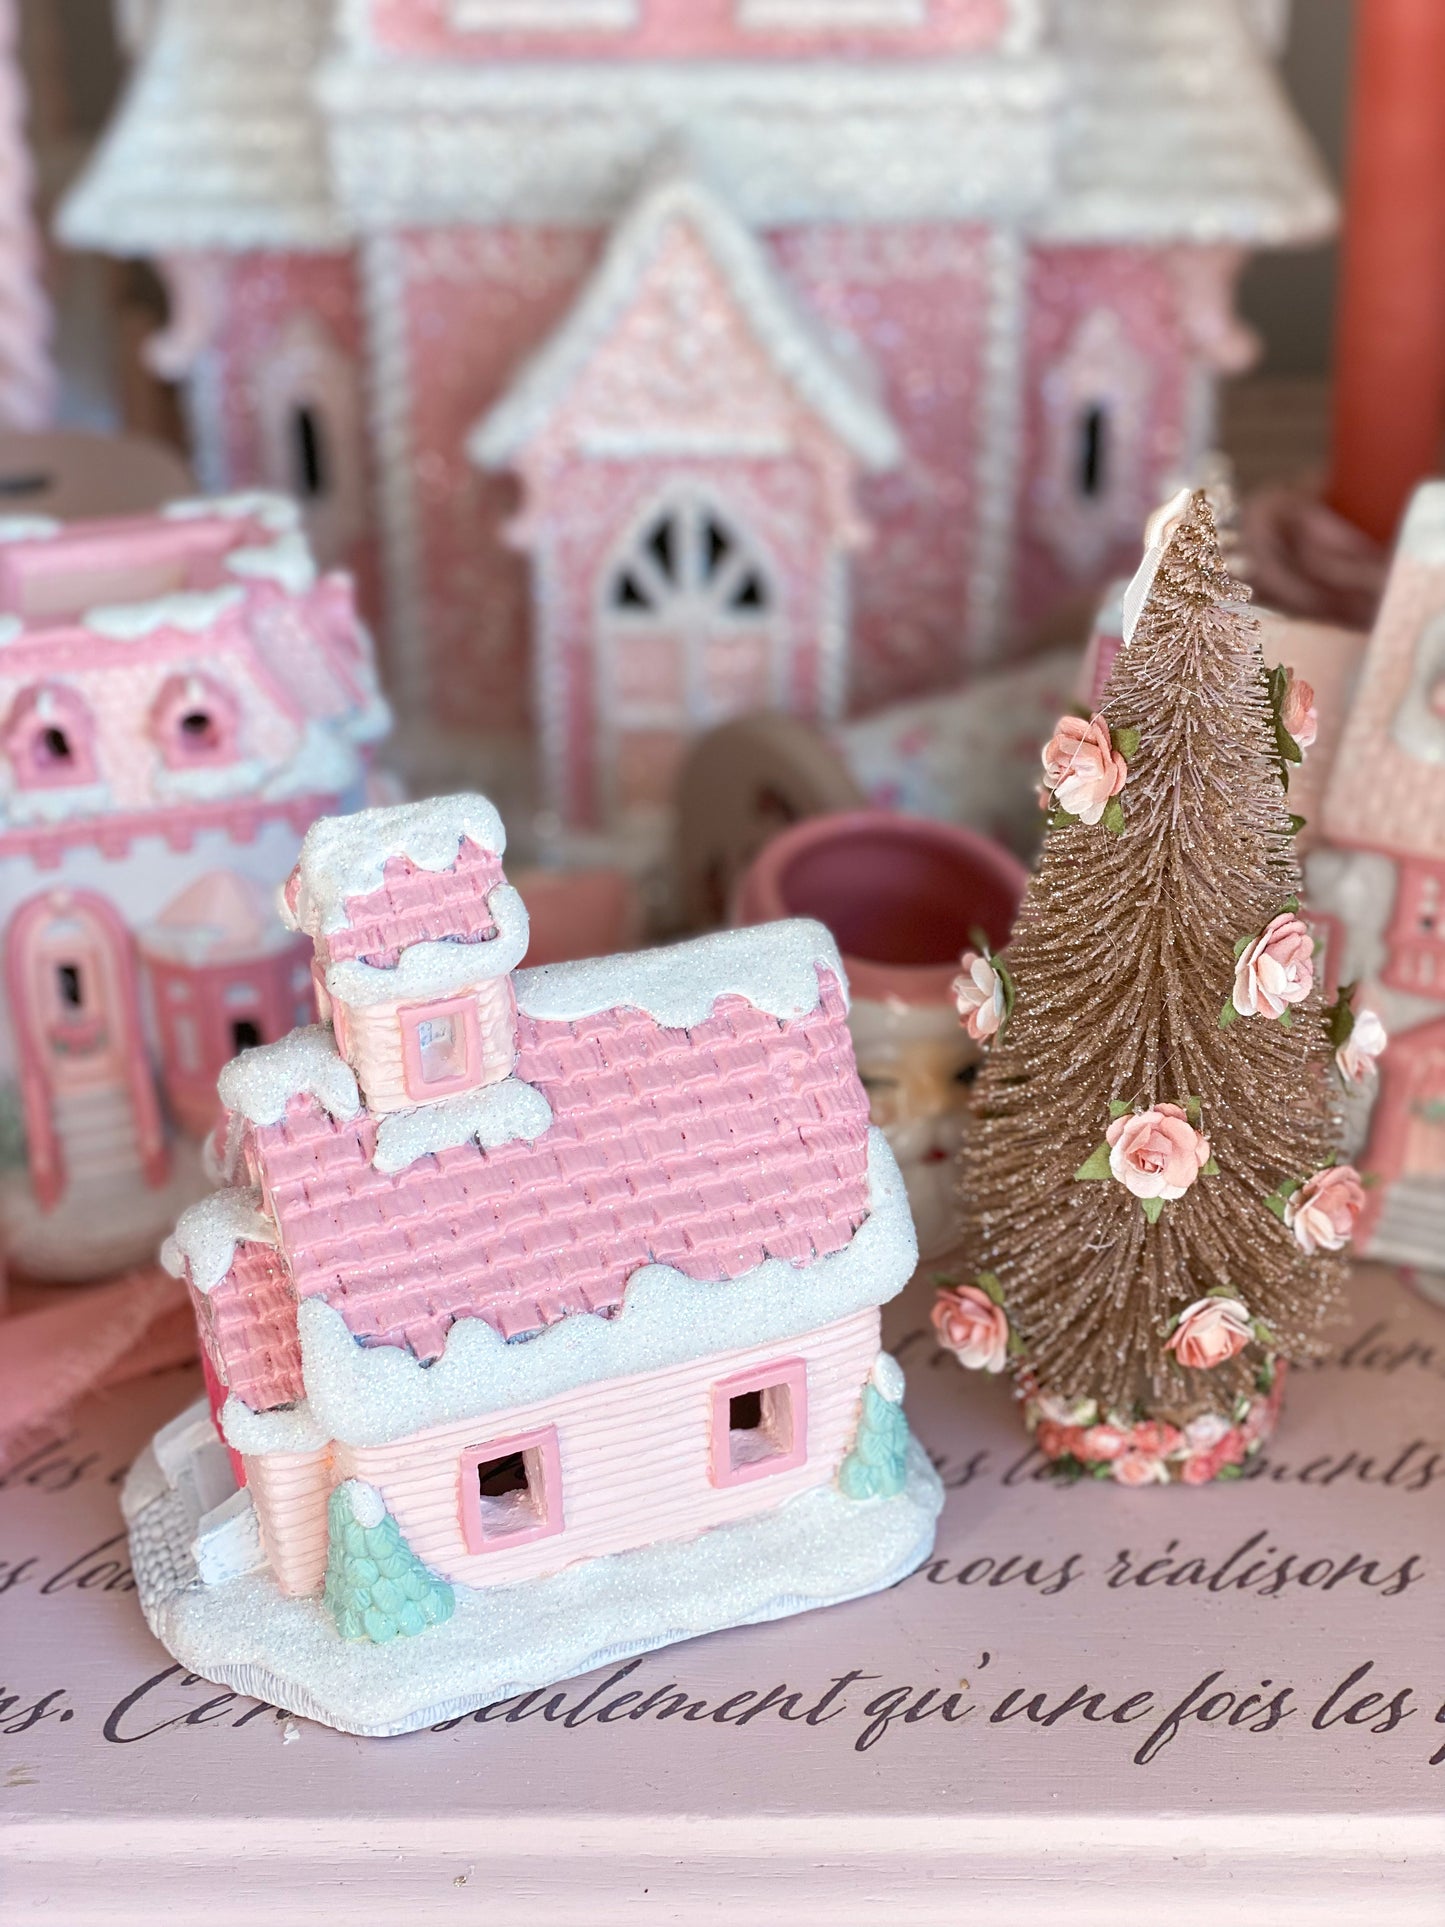 Bespoke Pastel Pink and White Petite Christmas Village Schoolhouse